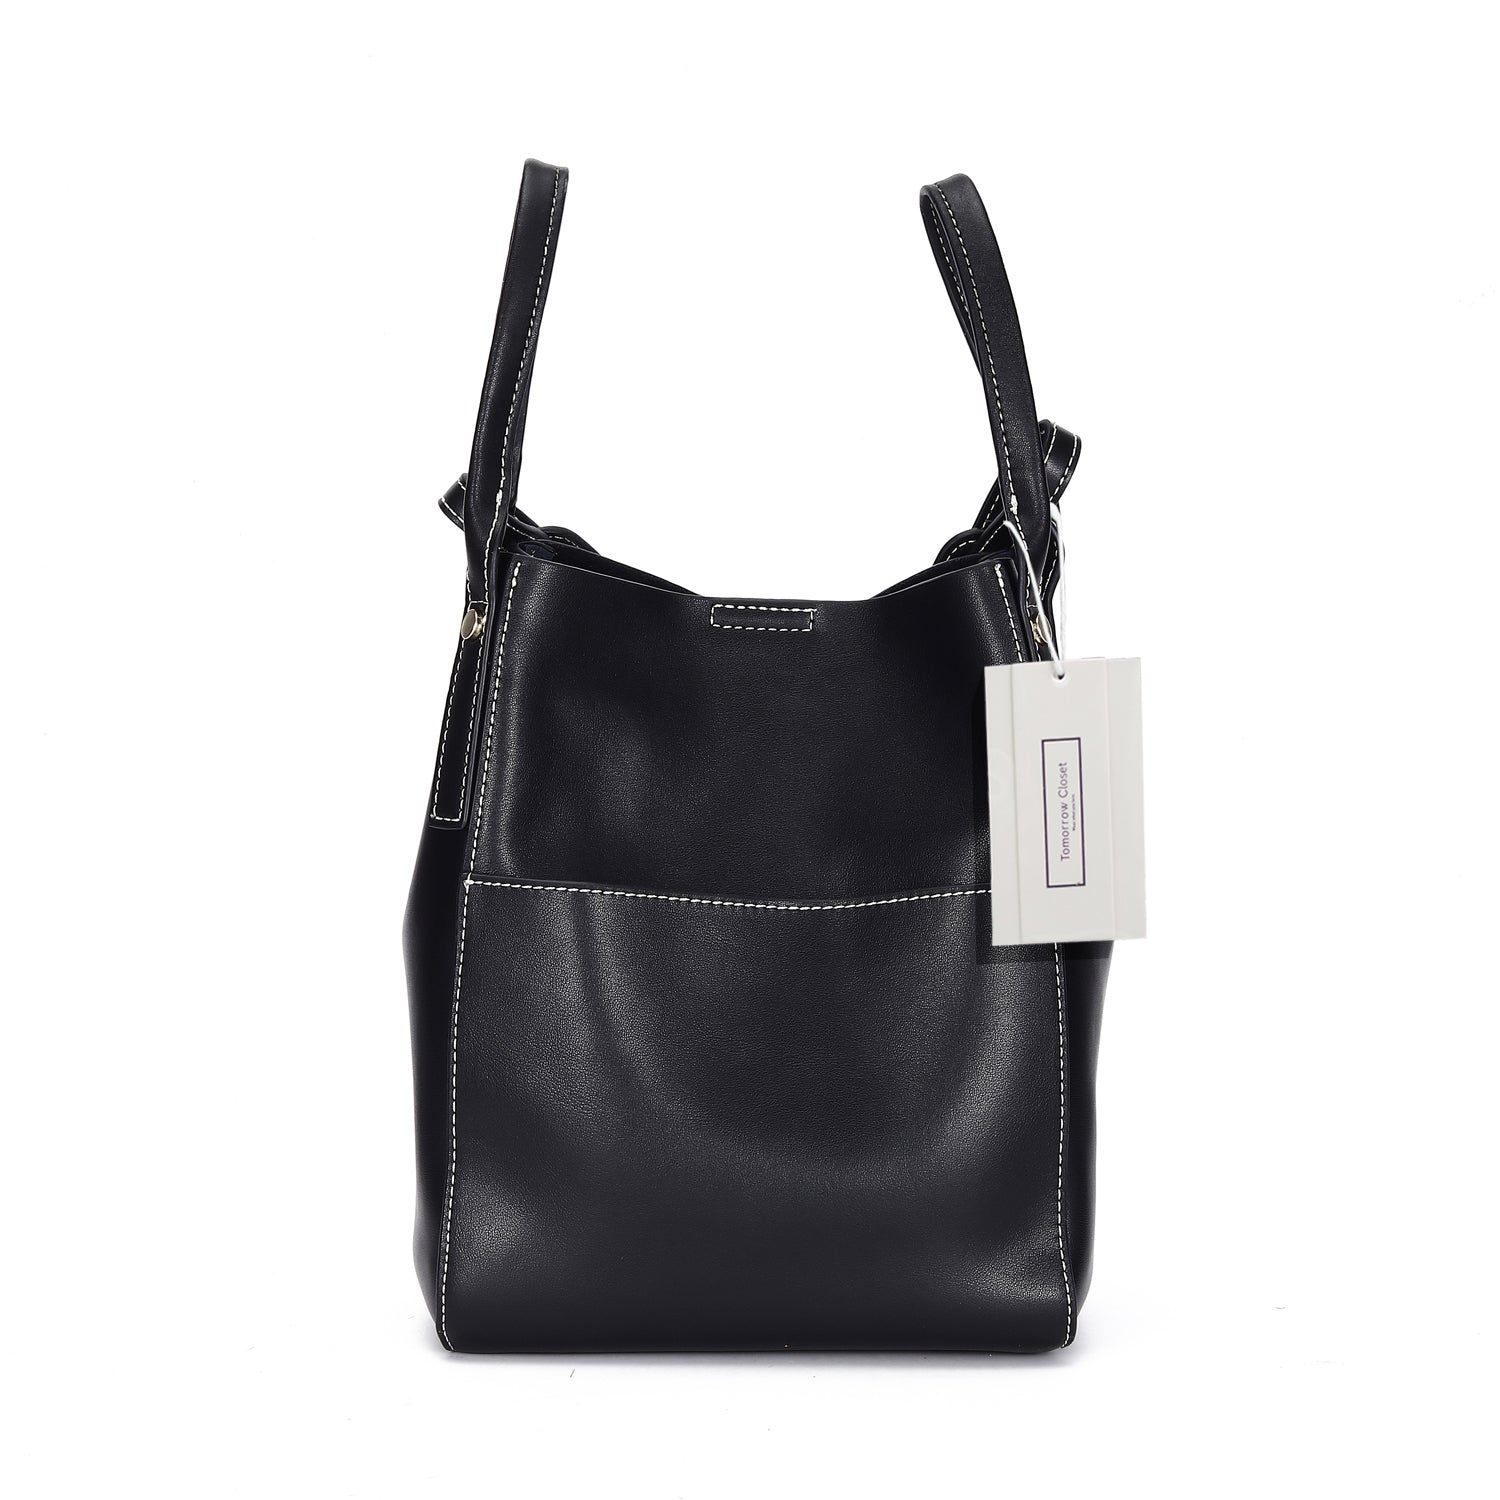 Women's genuine cowhide leather handbag Basket Lock design by Tomorrow Closet